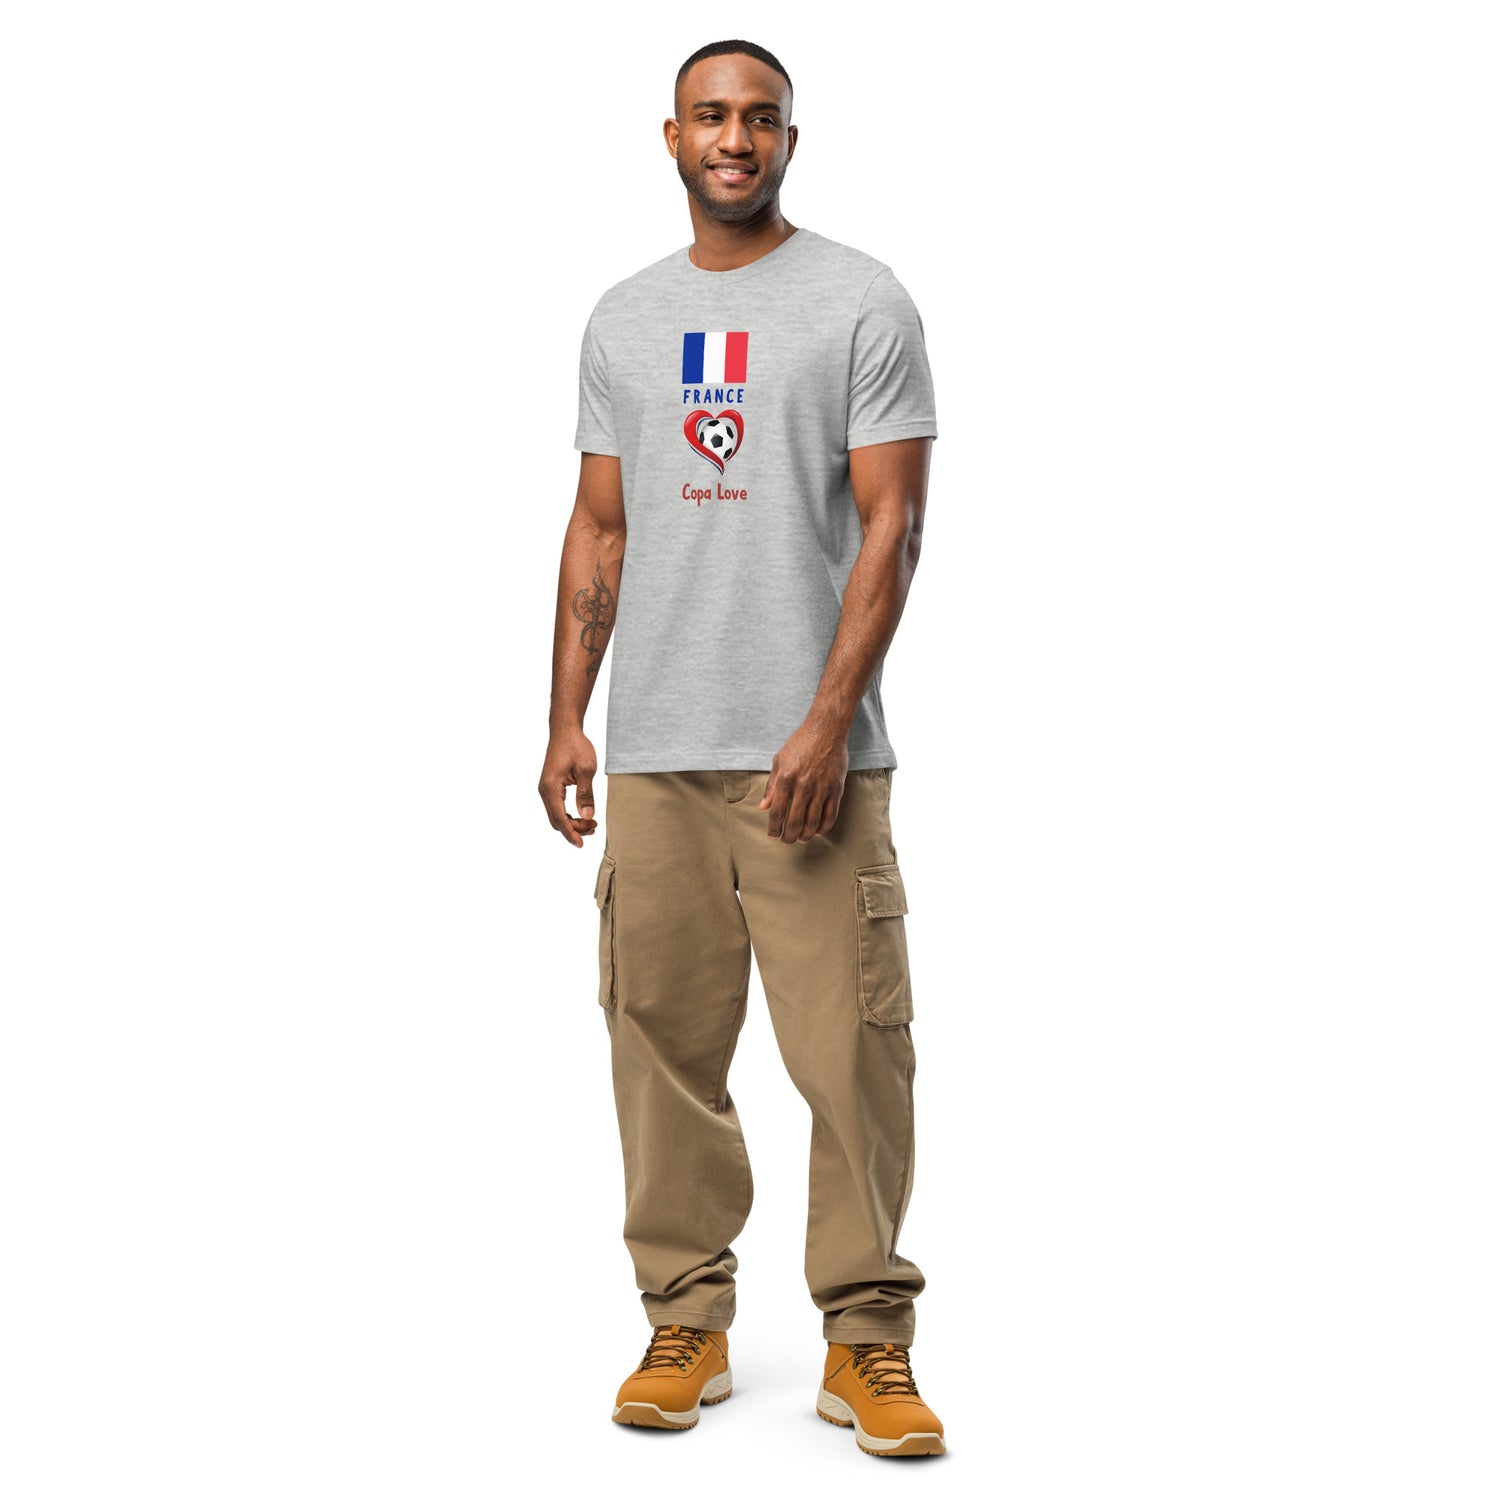 FRANCE - Copa Love Unisex t-shirt